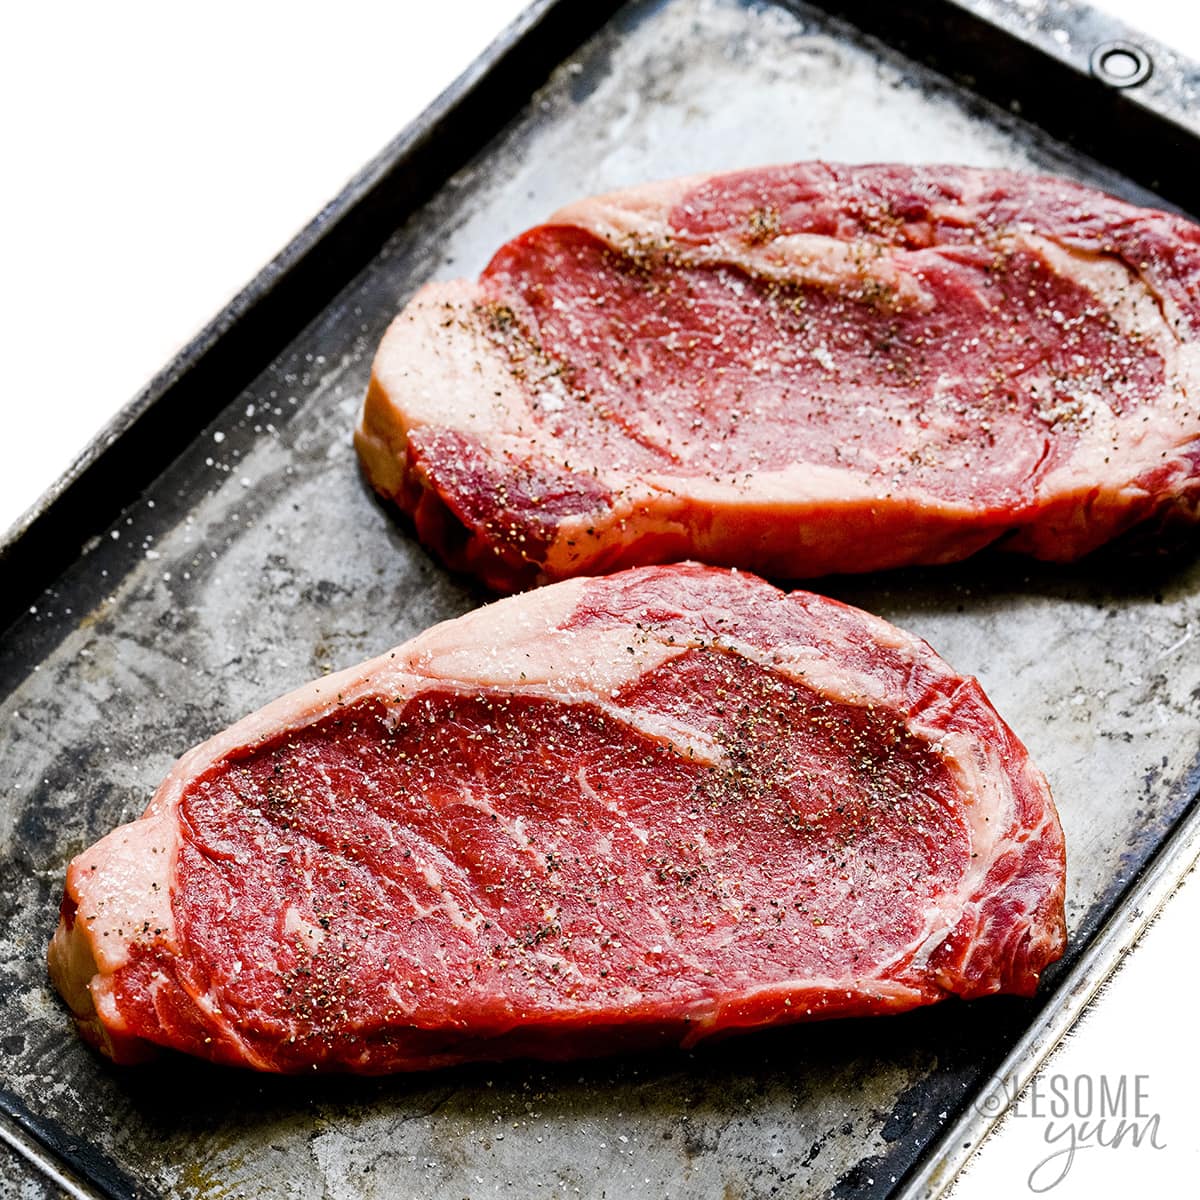 Raw steaks seasoned with salt and pepper.